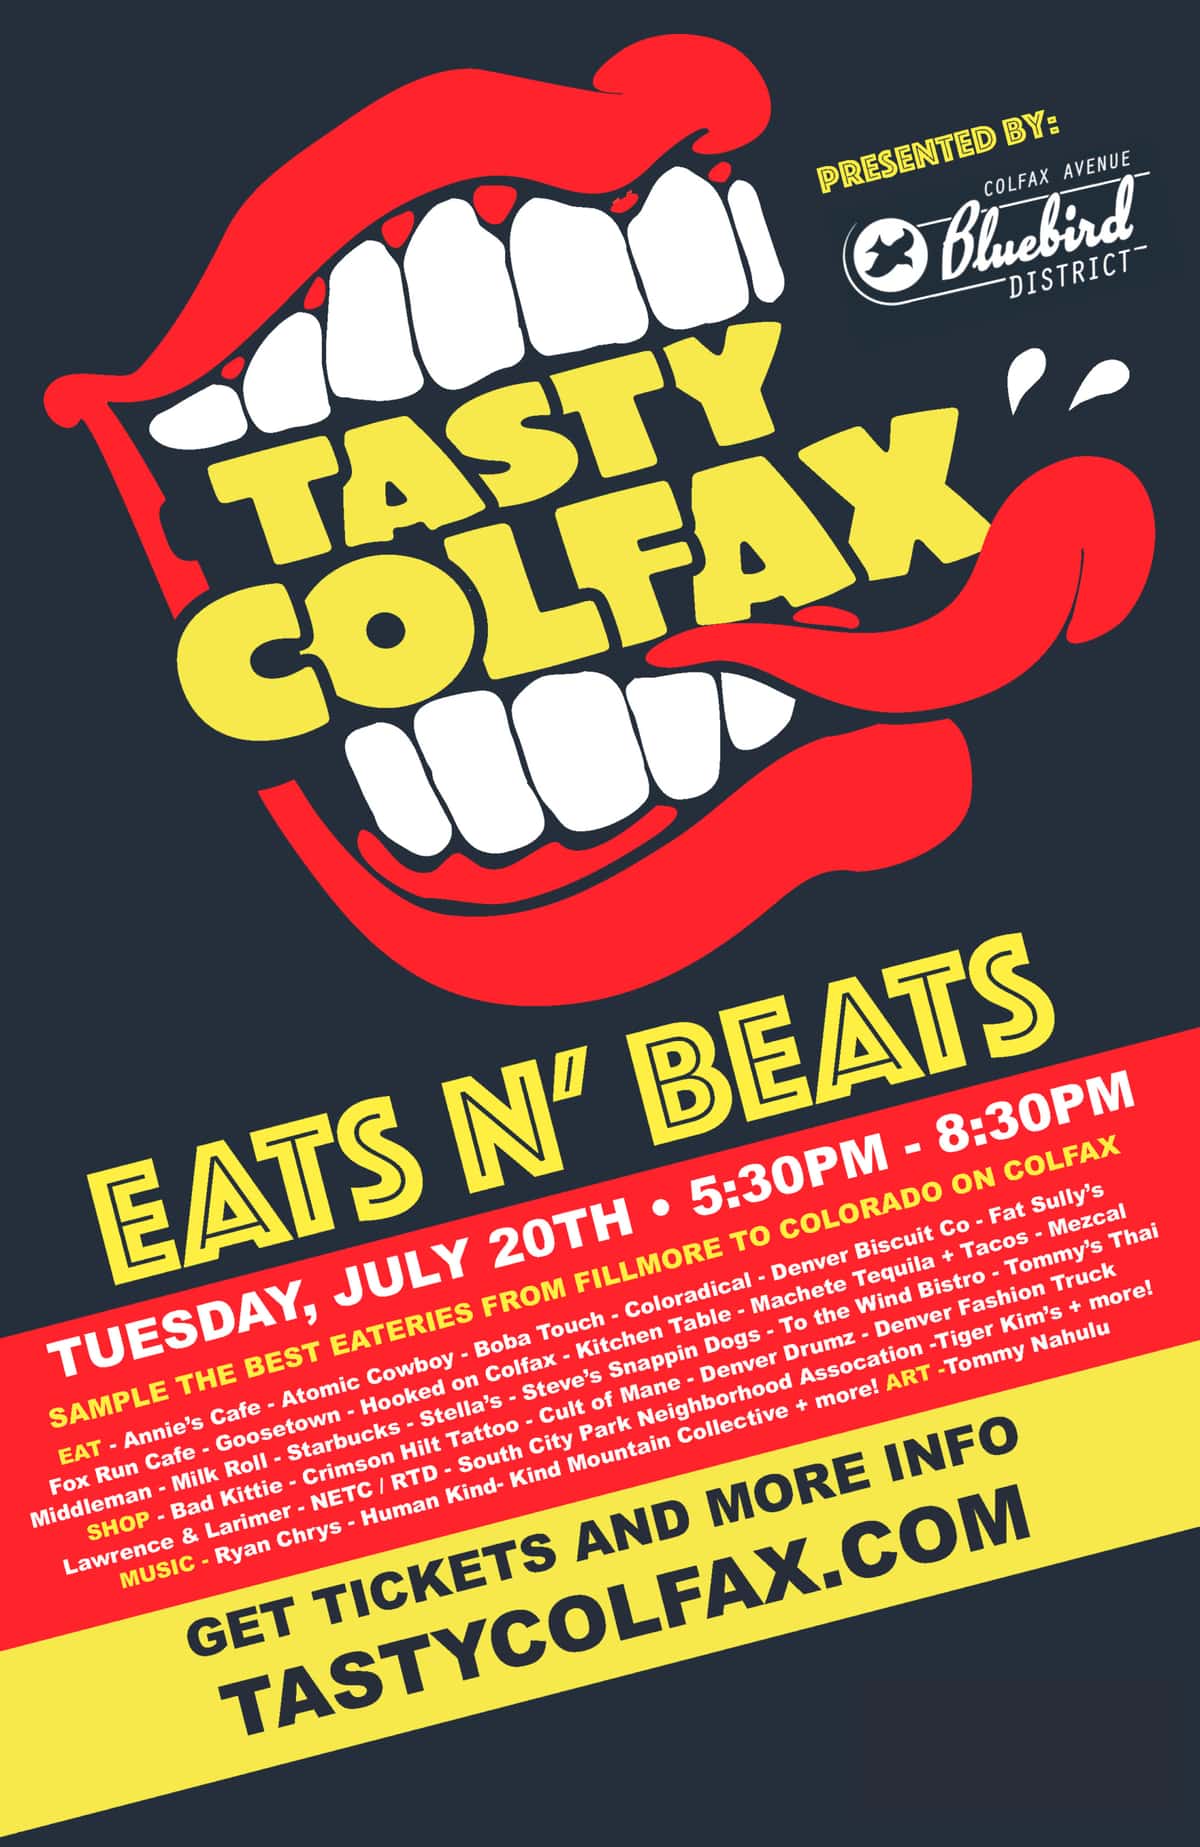 Tasty Colfax tix now on sale!